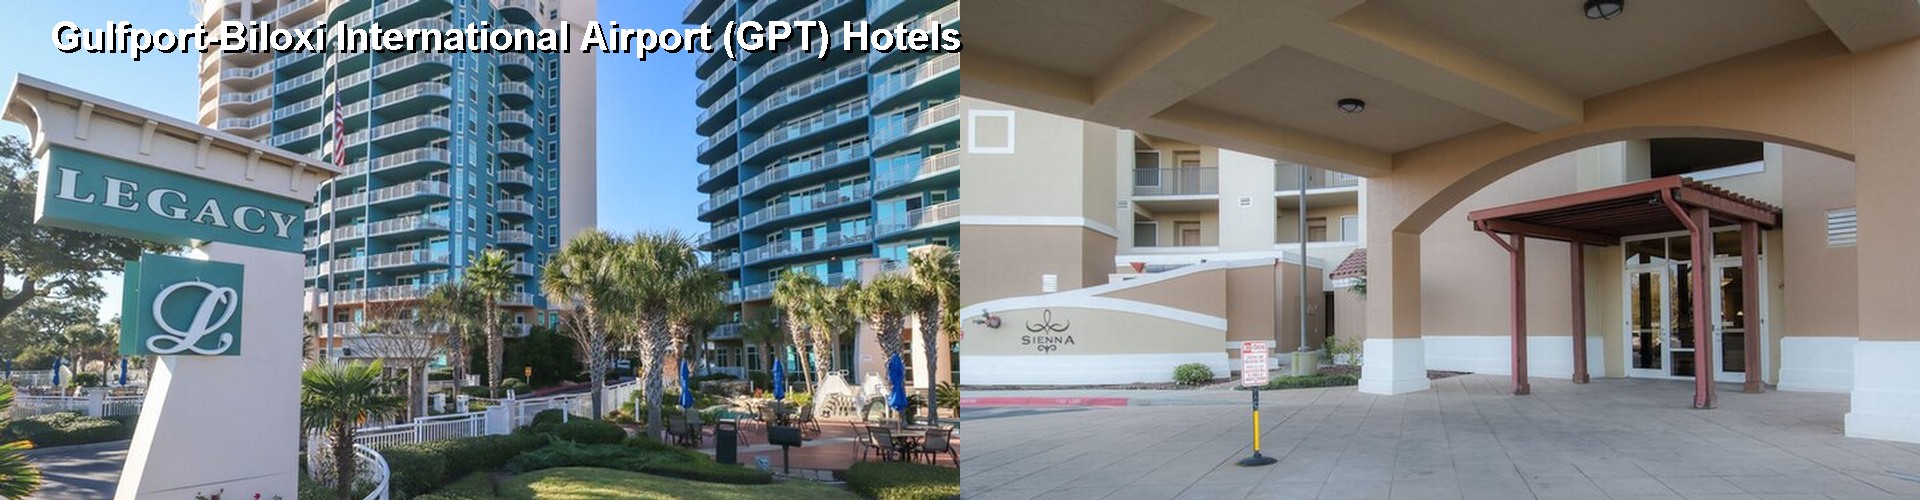 5 Best Hotels near Gulfport-Biloxi International Airport (GPT)